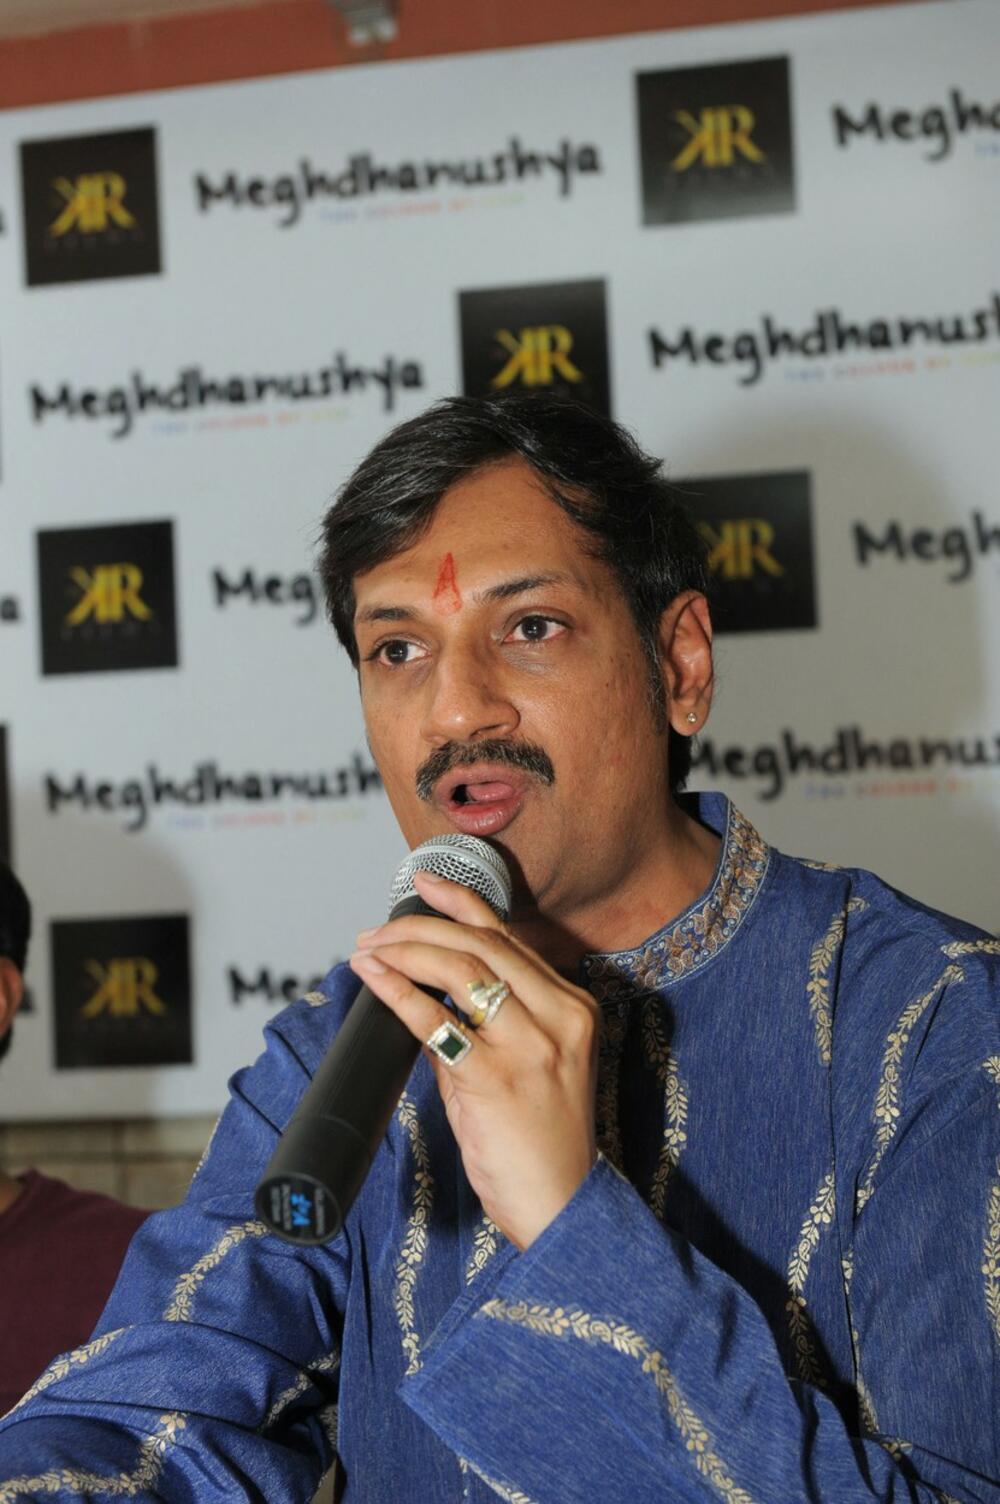 Manvendra Gohil